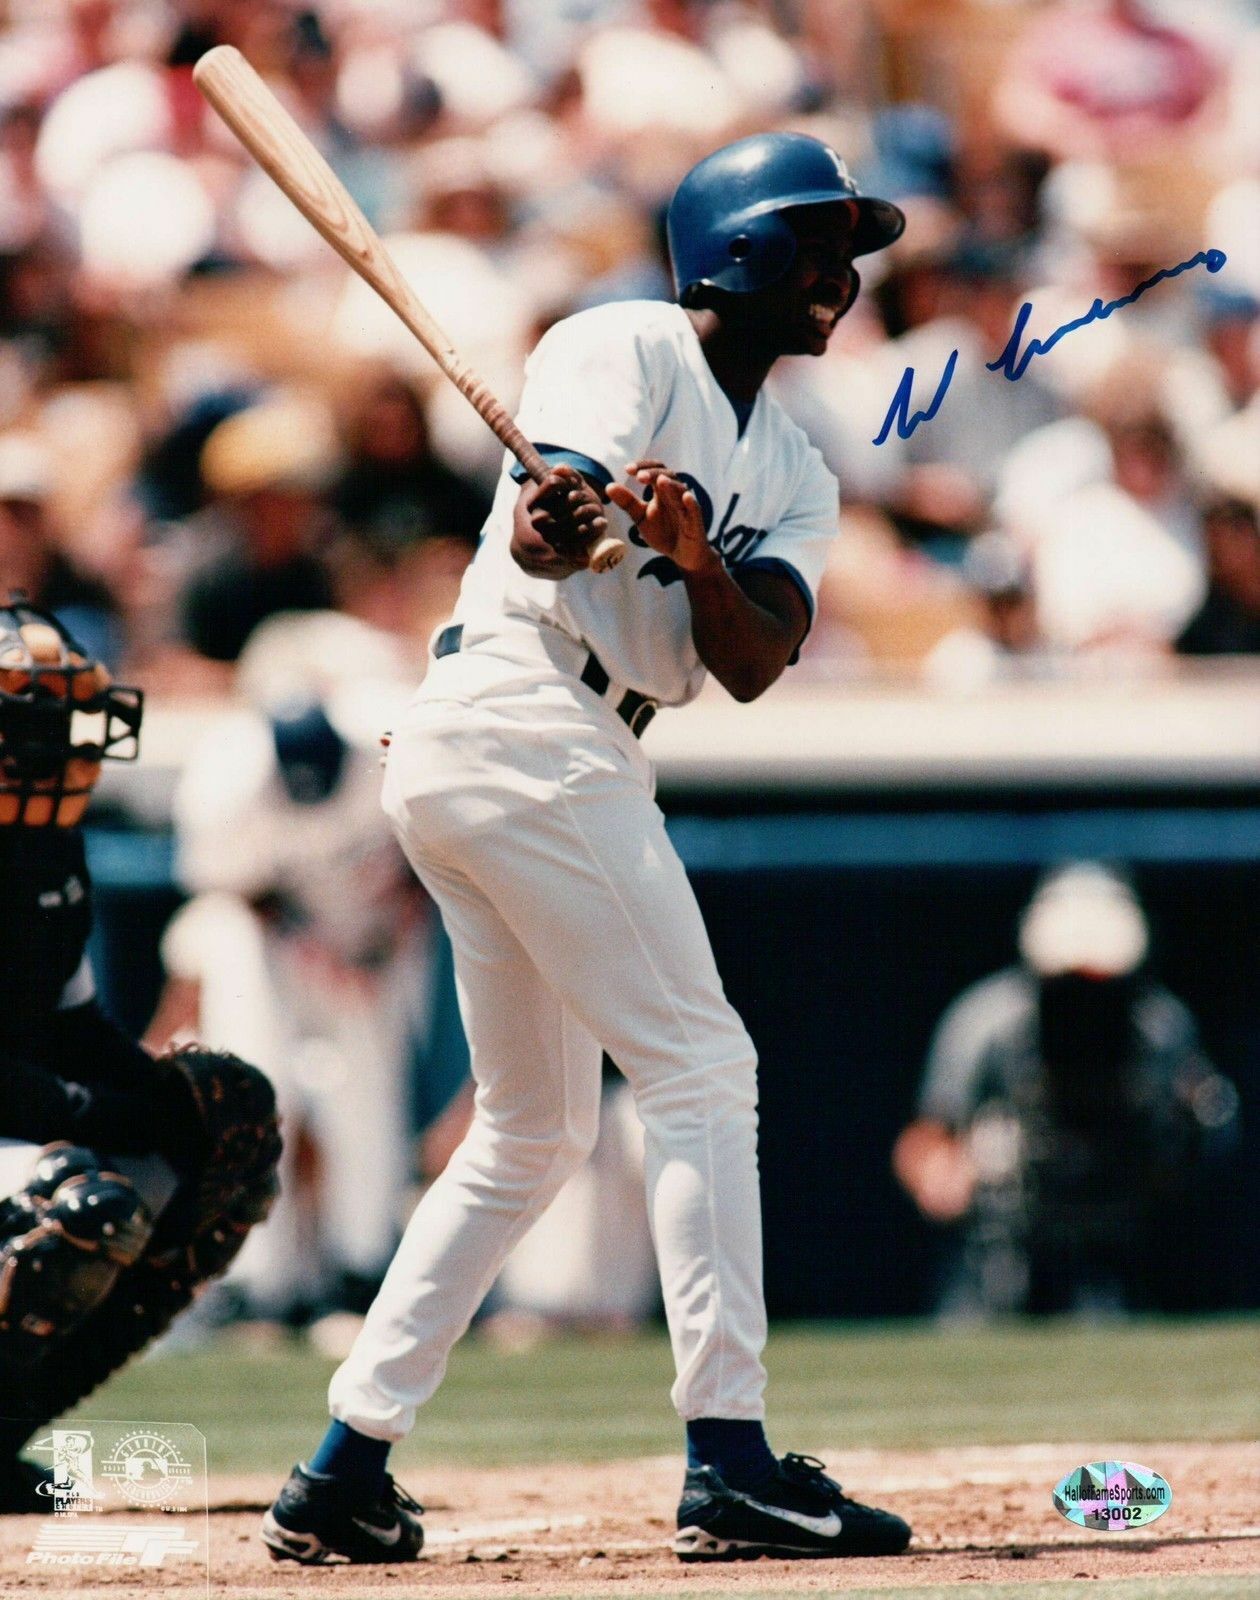 Wilton Guerrero Signed 8X10 Photo Poster painting Autograph LA Dodgers Batting High Auto w/COA